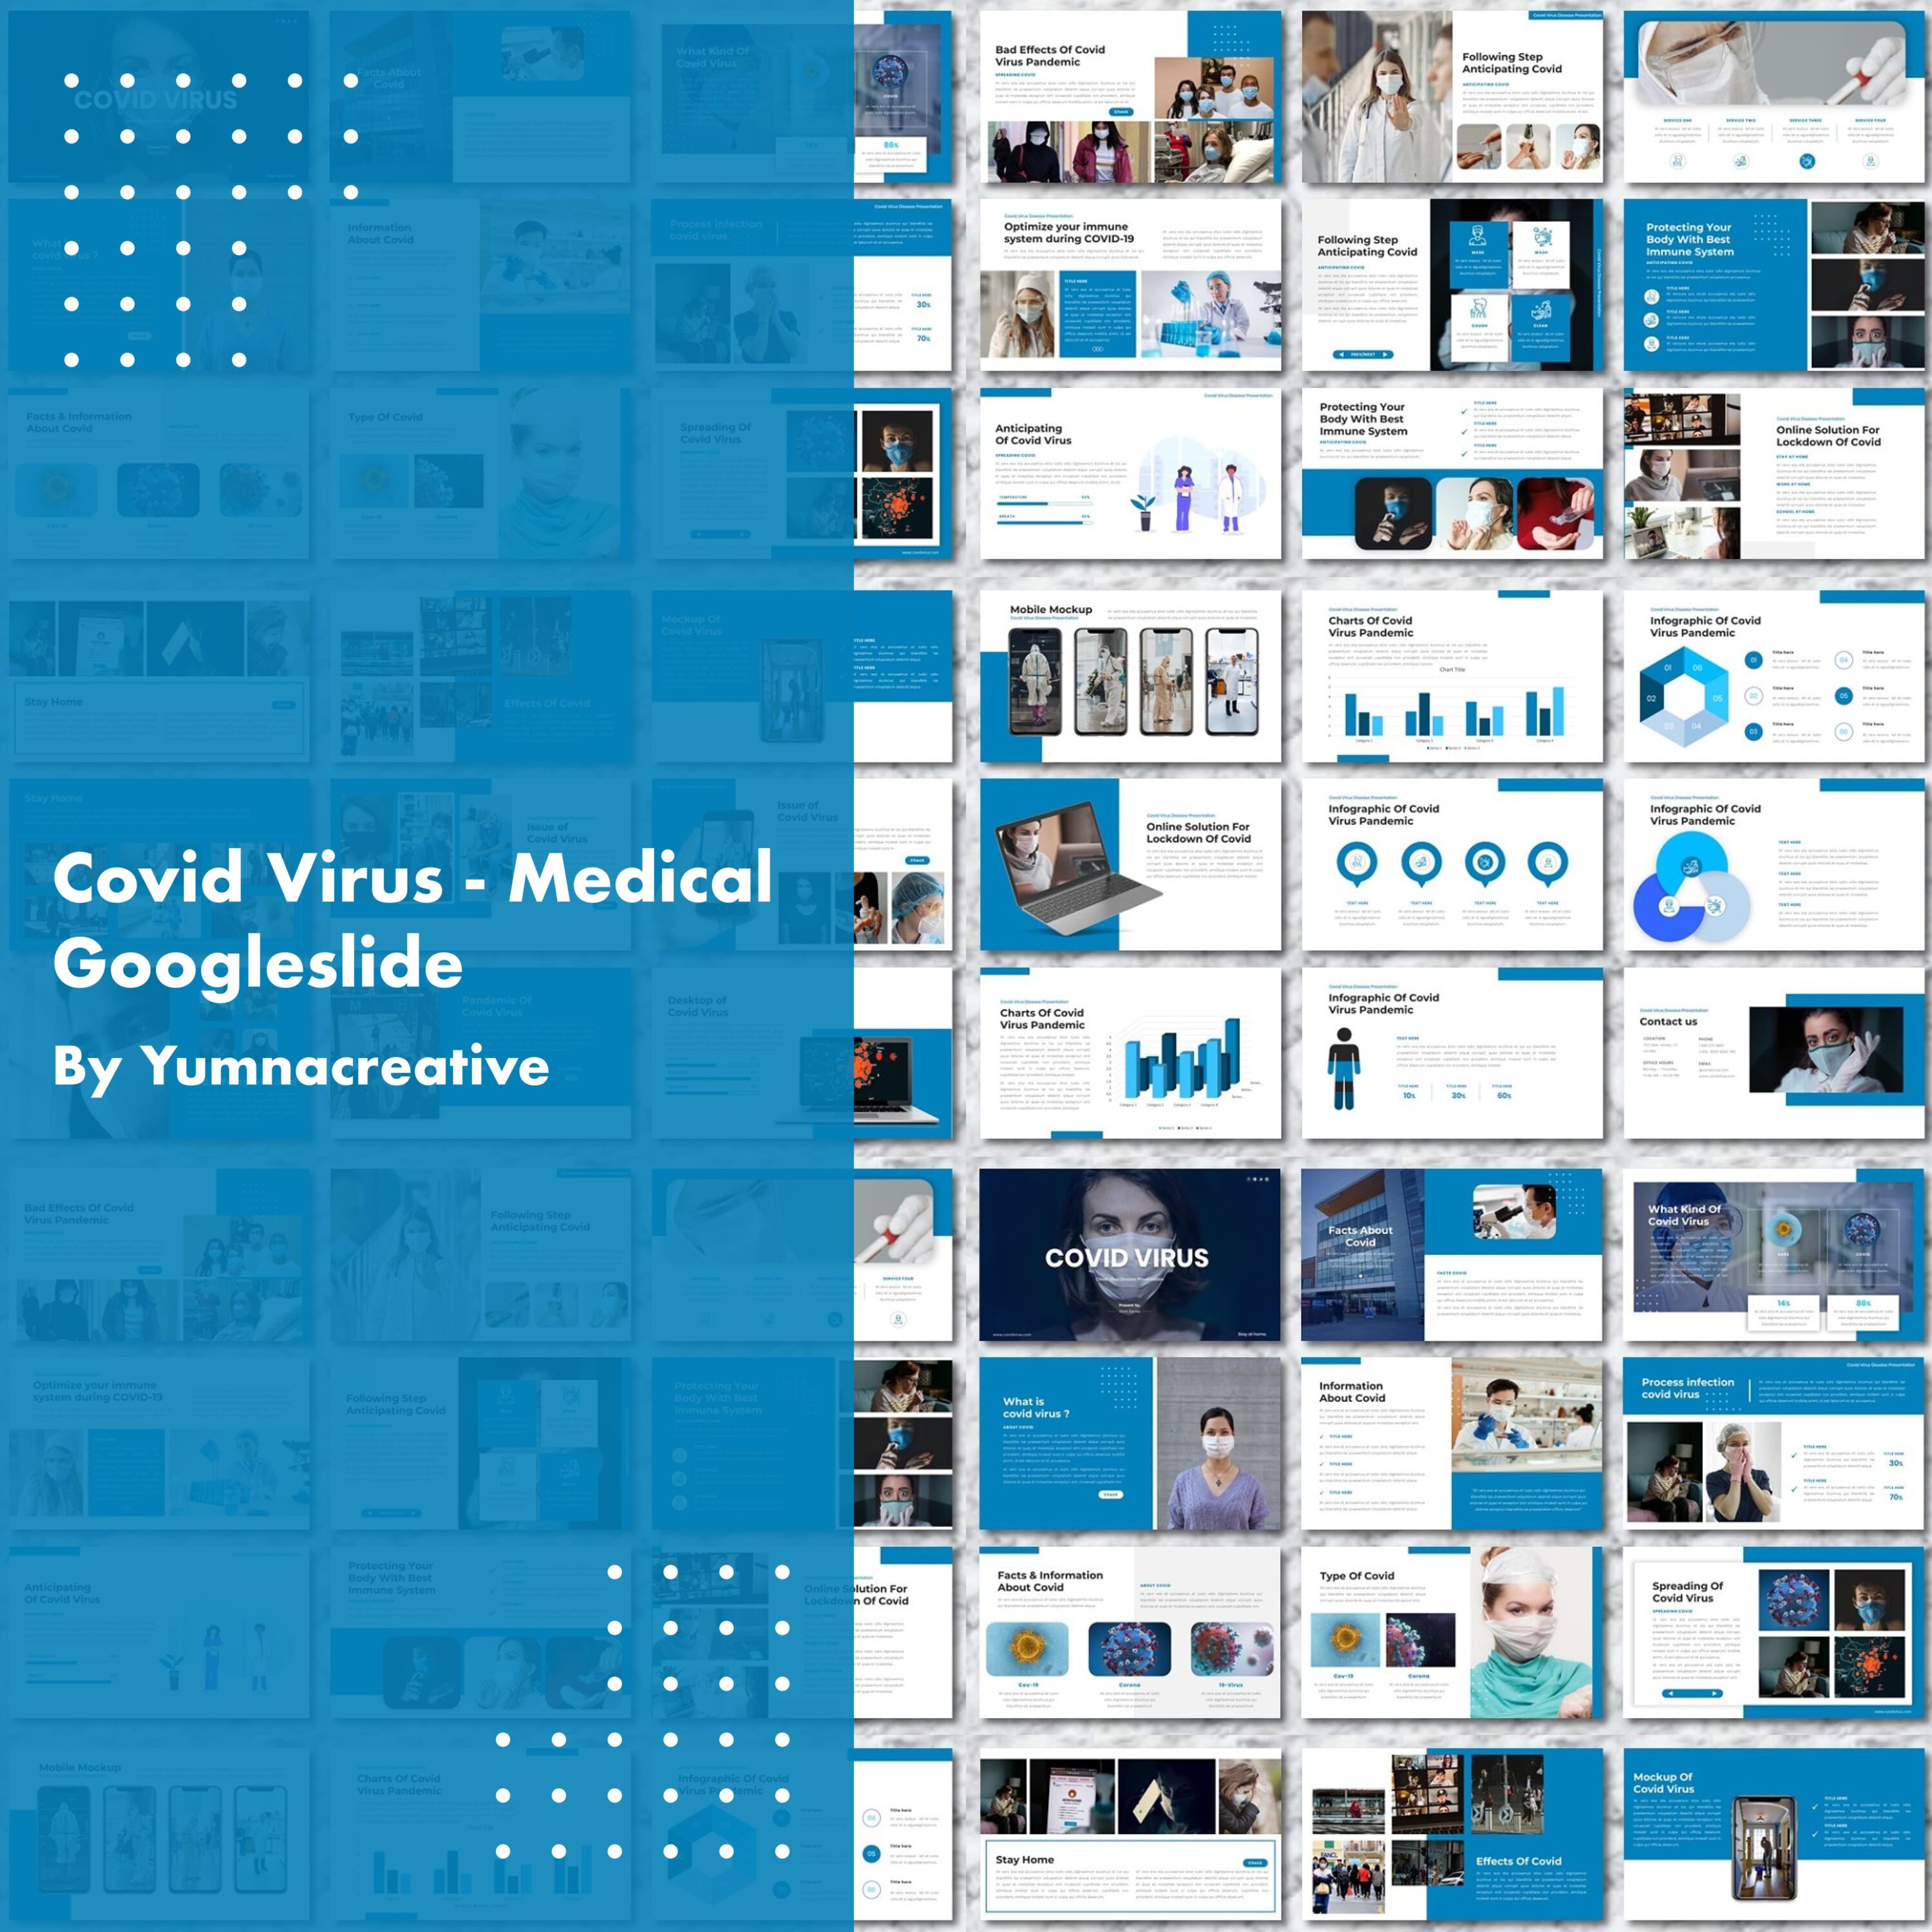 Covid Virus Medical Google Slide - main image preview.